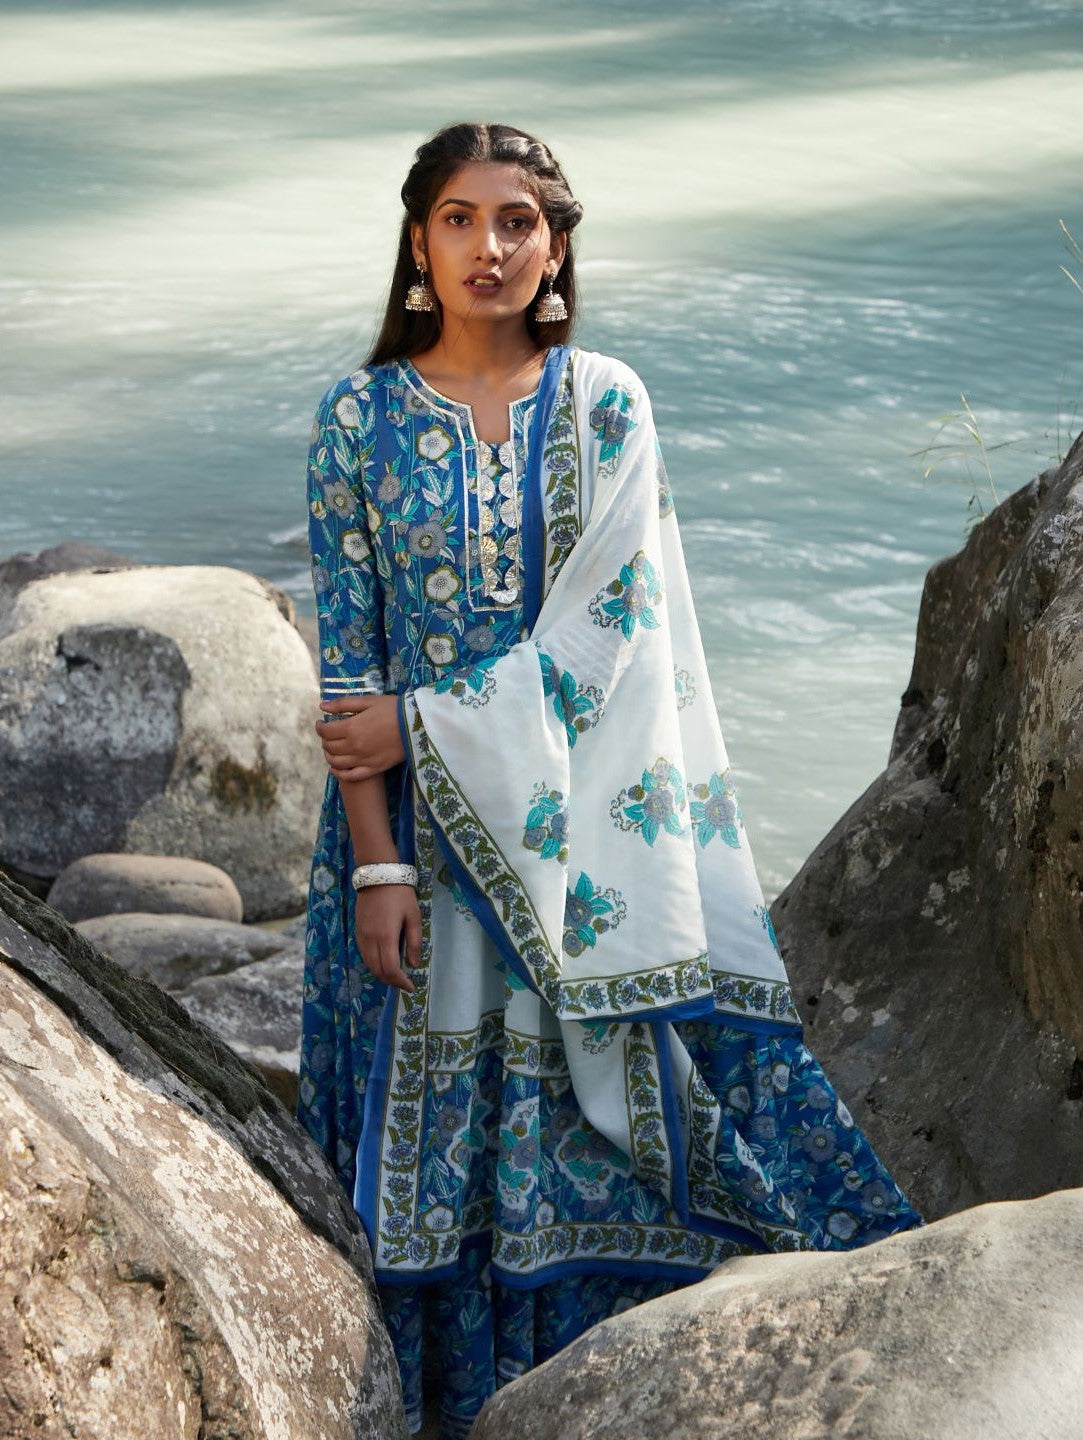 Blue Floral Print Maxi Dress With Dupatta